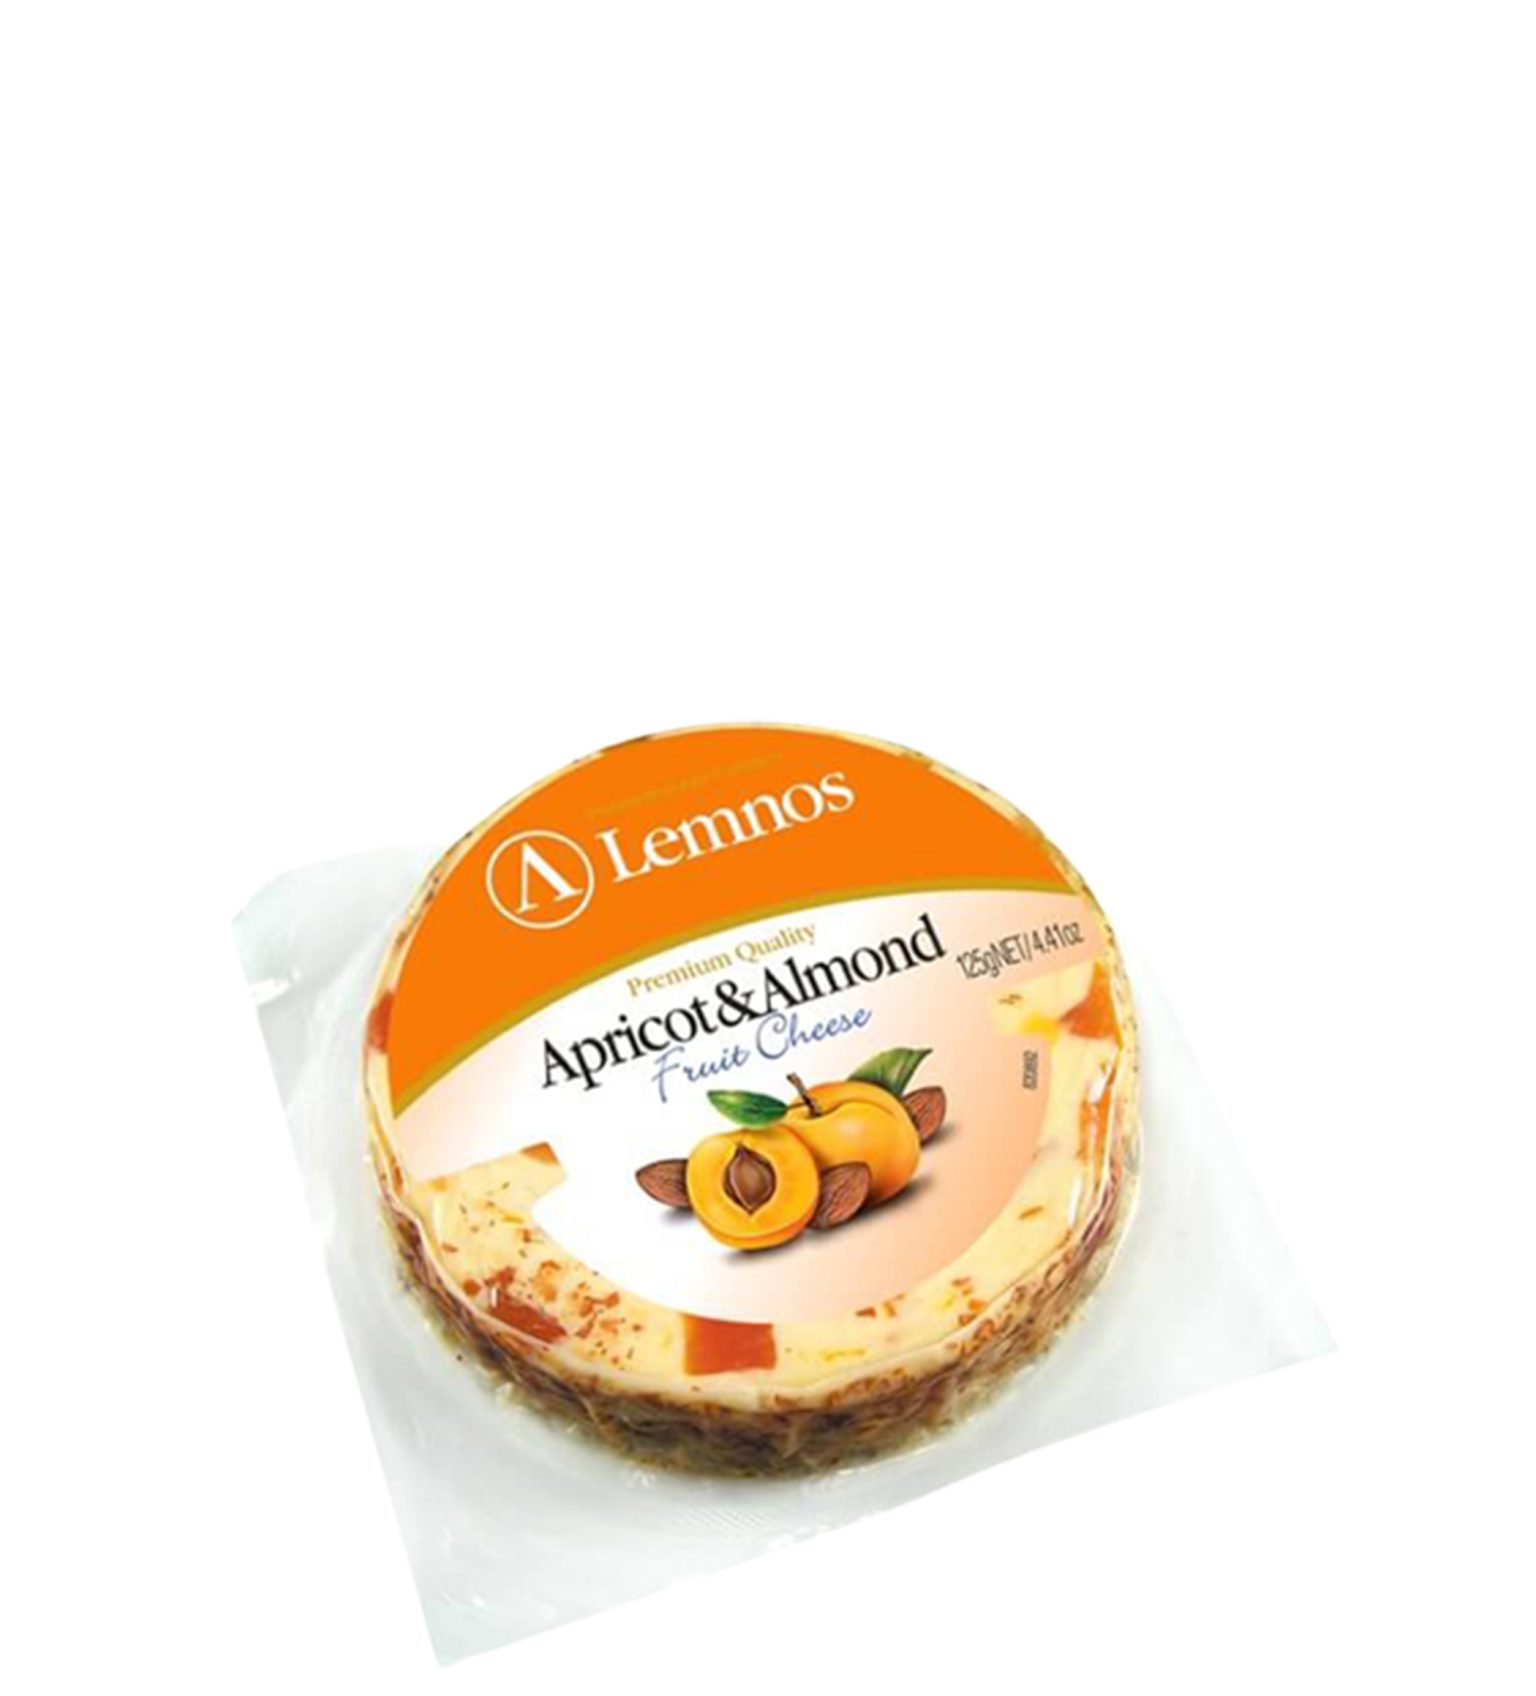 Lemnos Apricot & Almond 125g-image